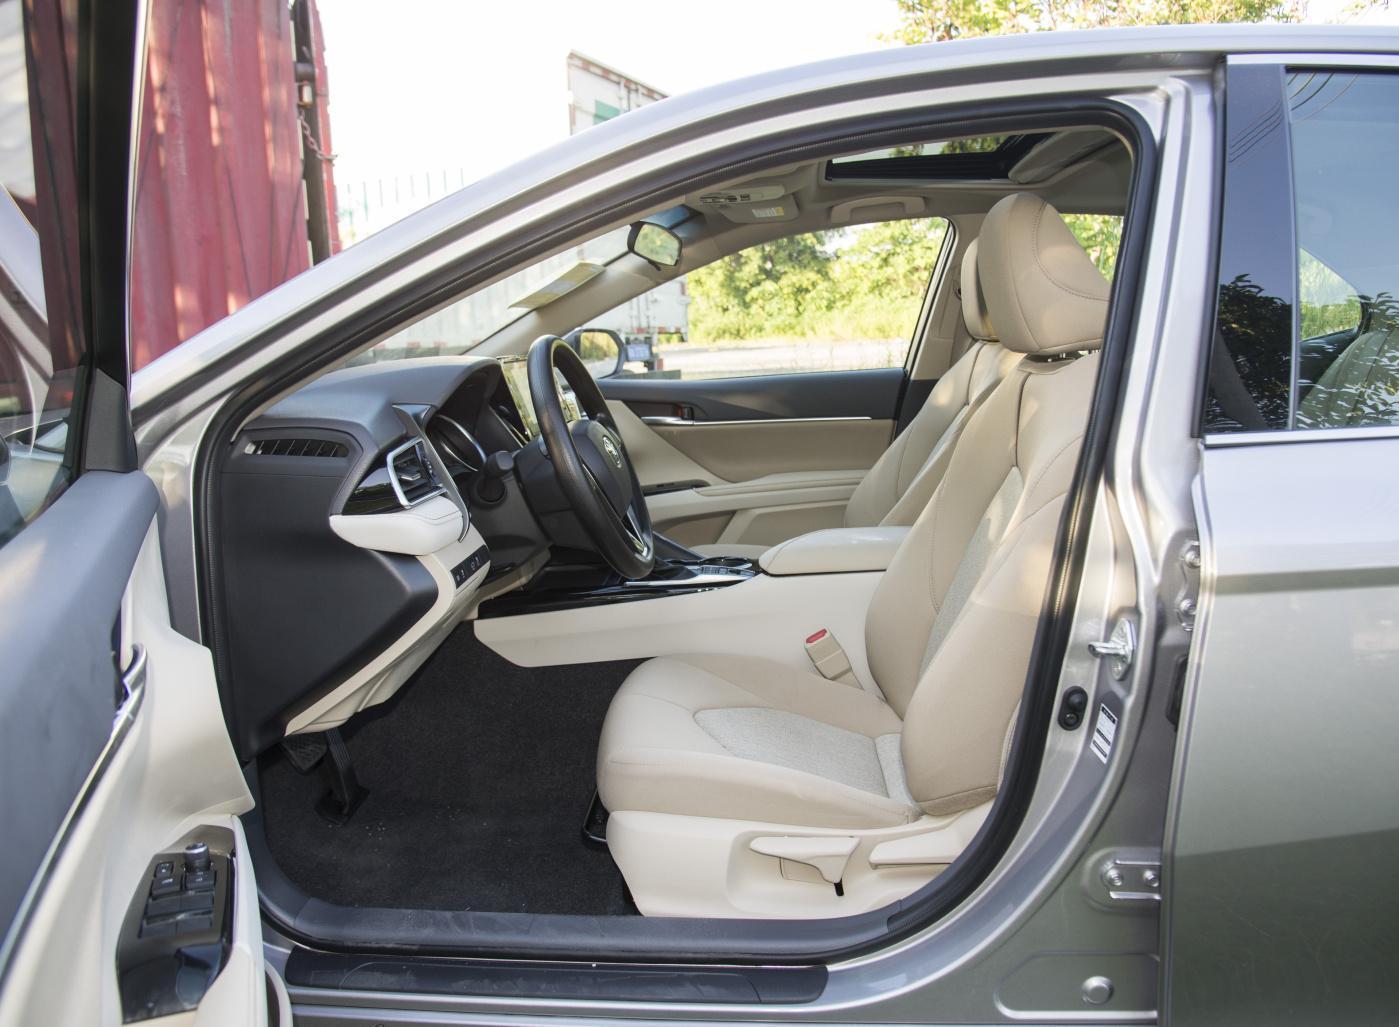 Toyota Camry electric vehicles car door